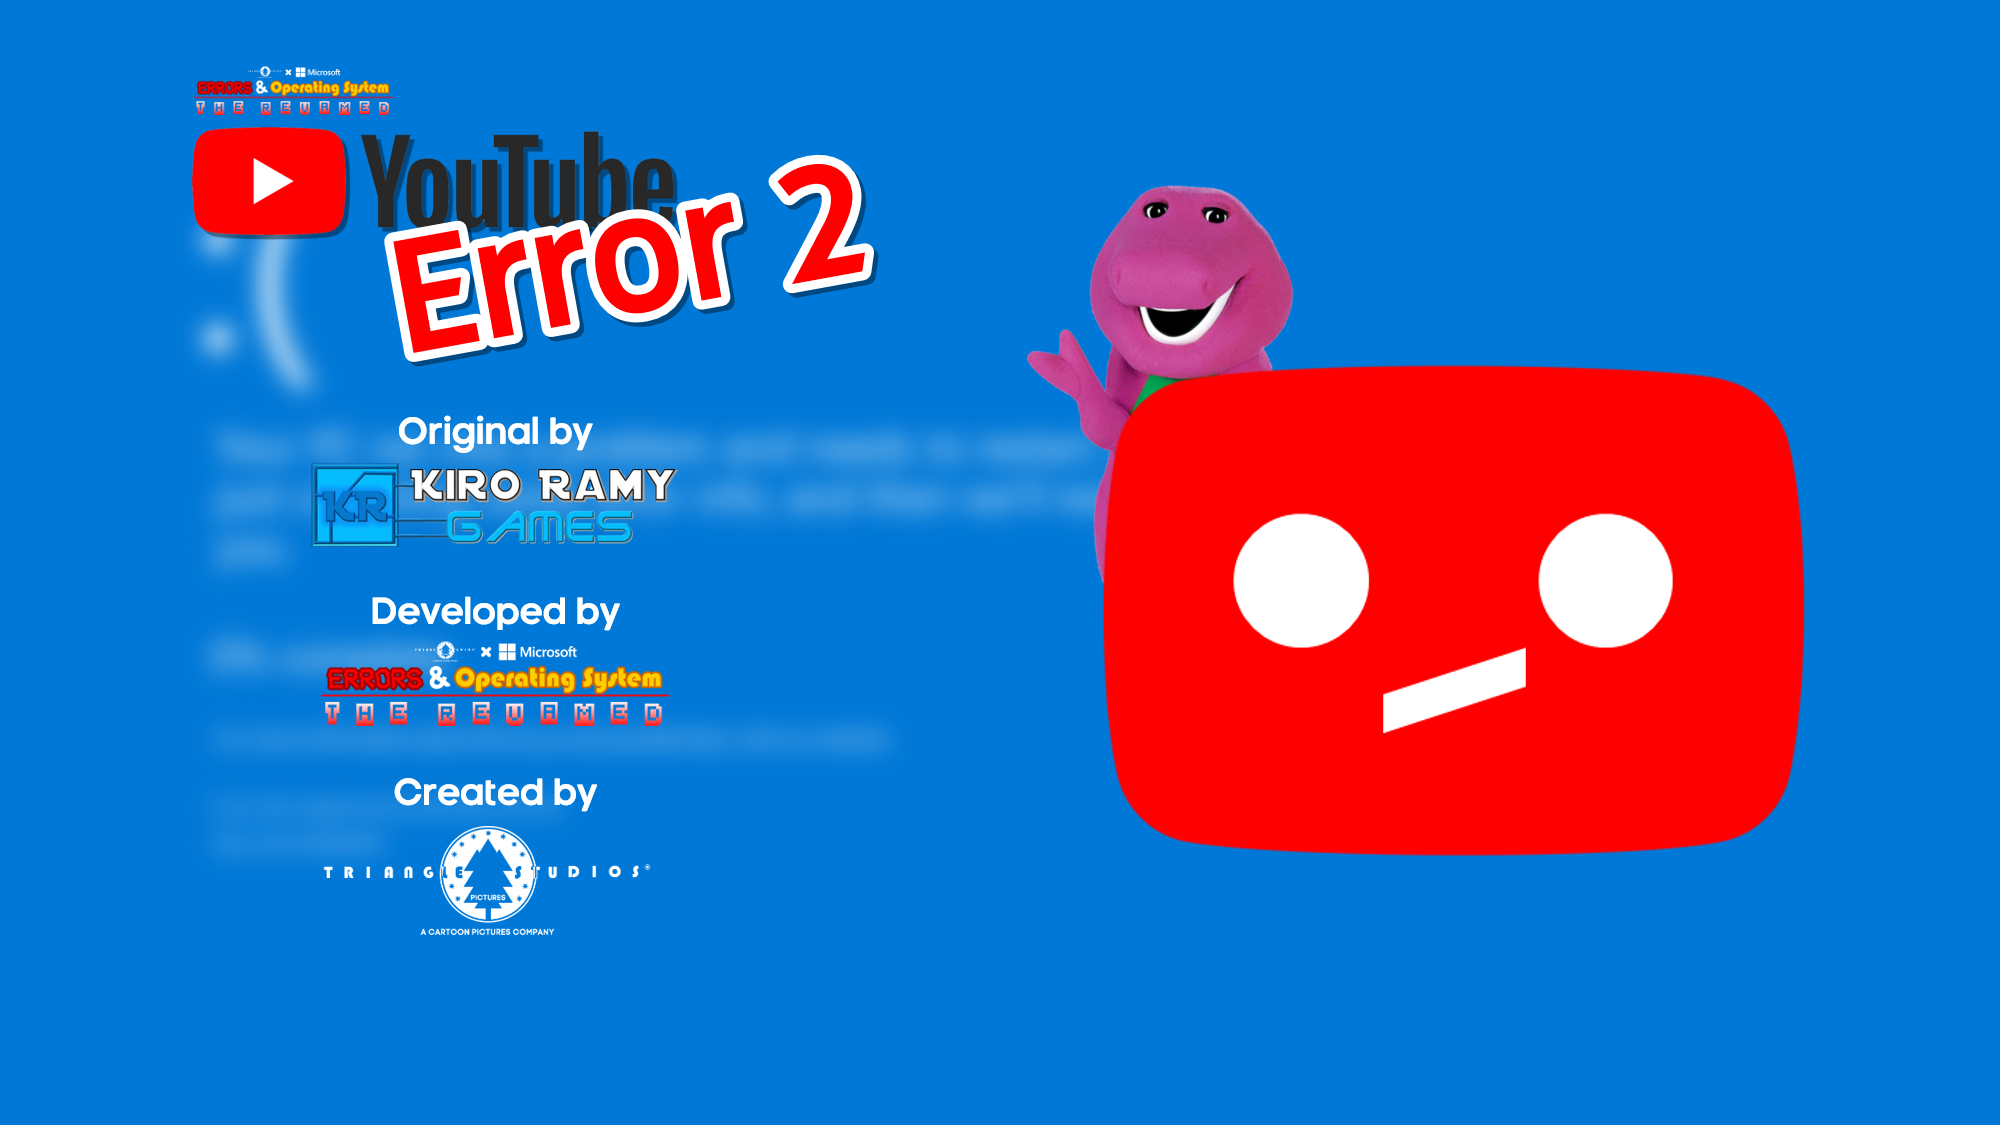 YouTube Error 2 - The Errors & OS Games